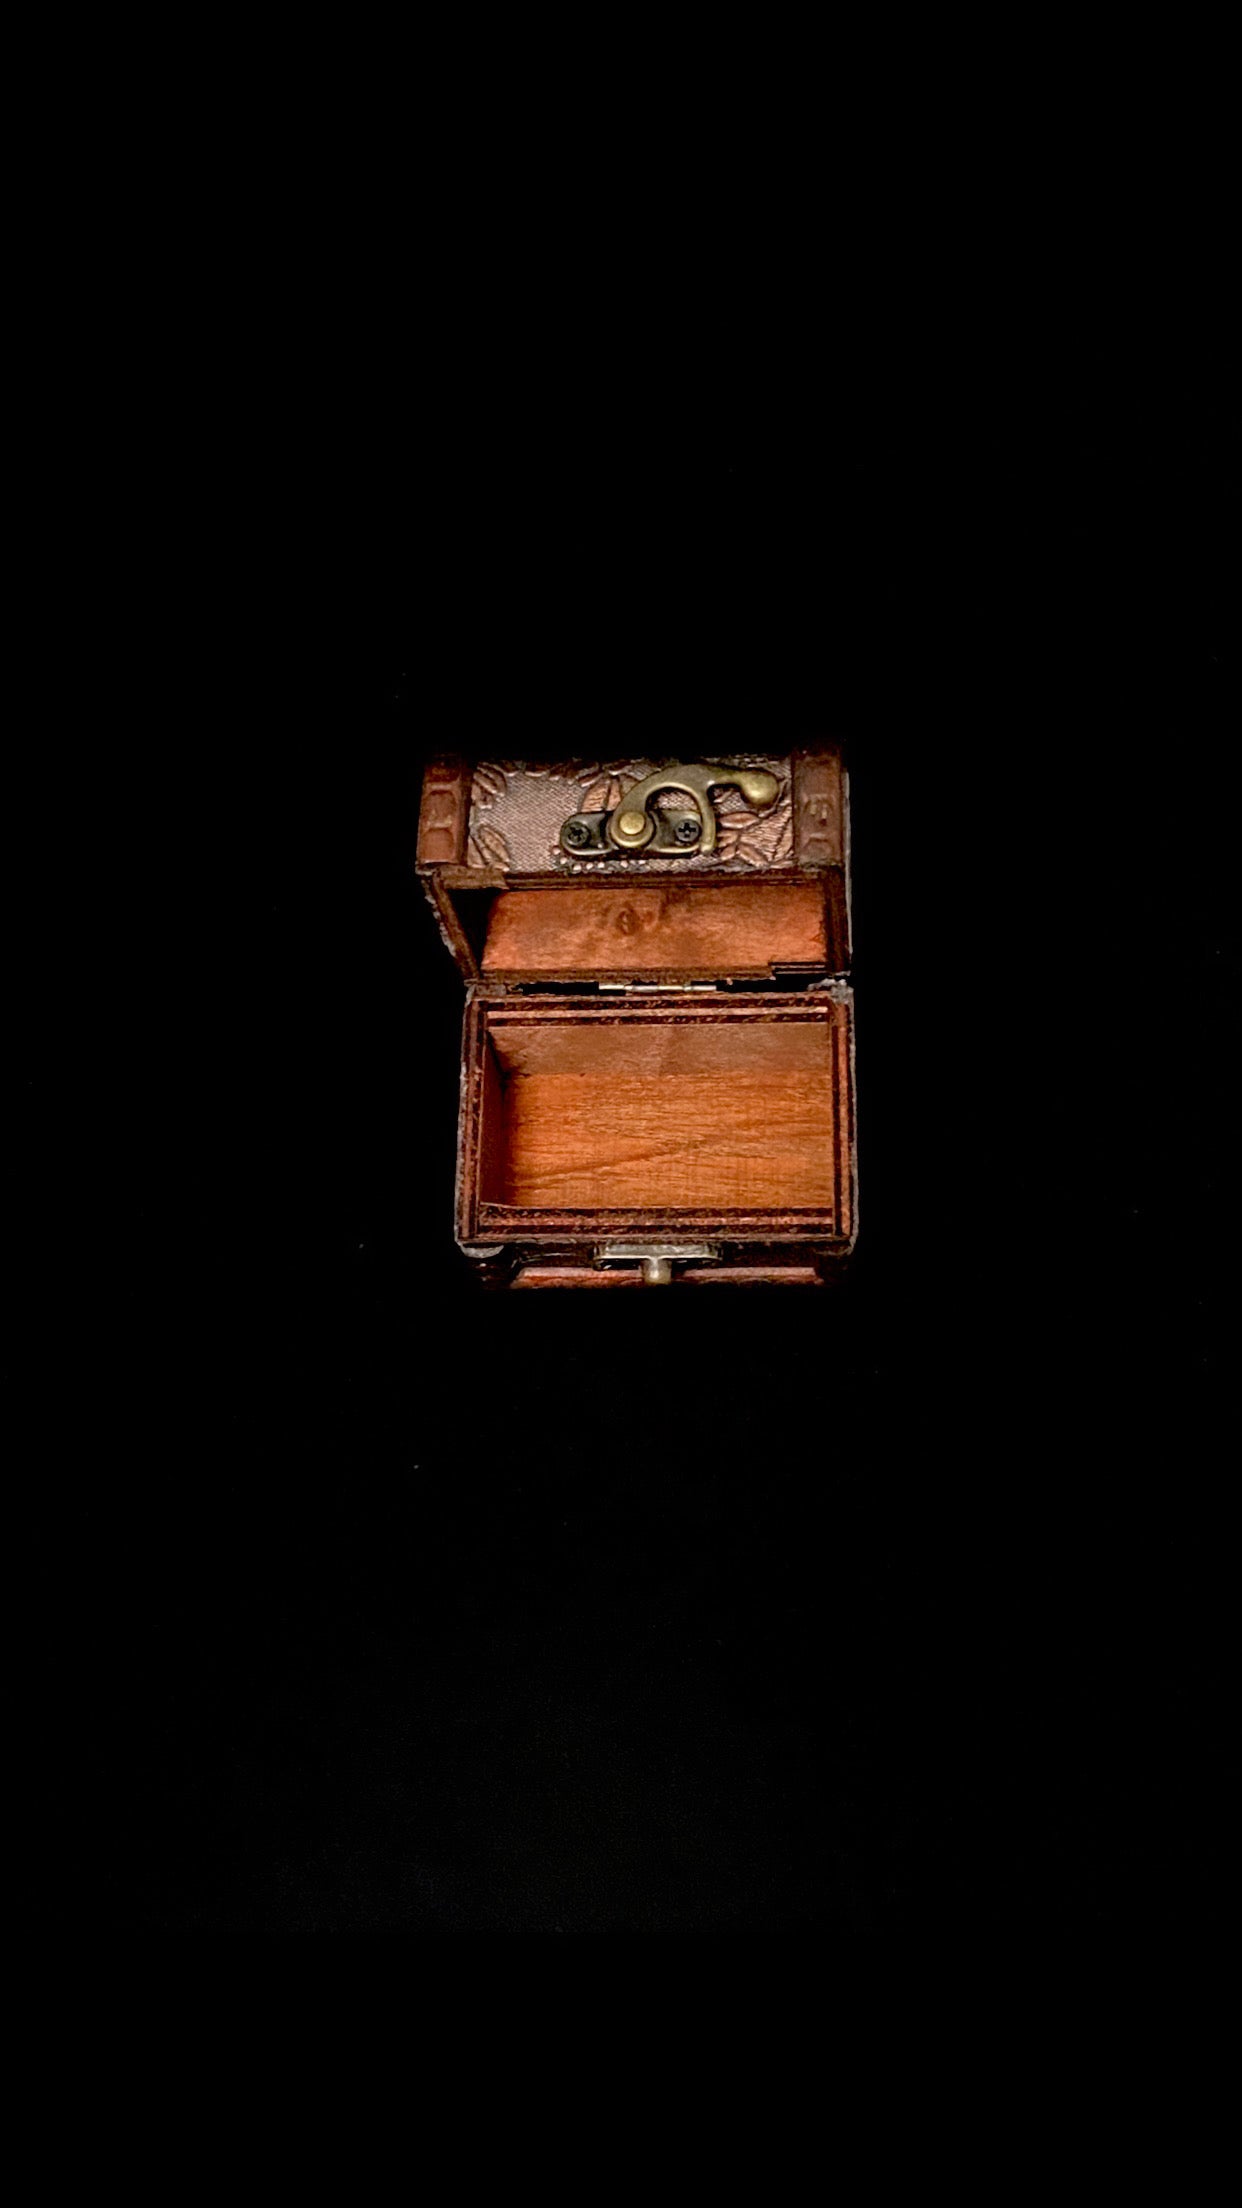 صندوق خشبي جميل